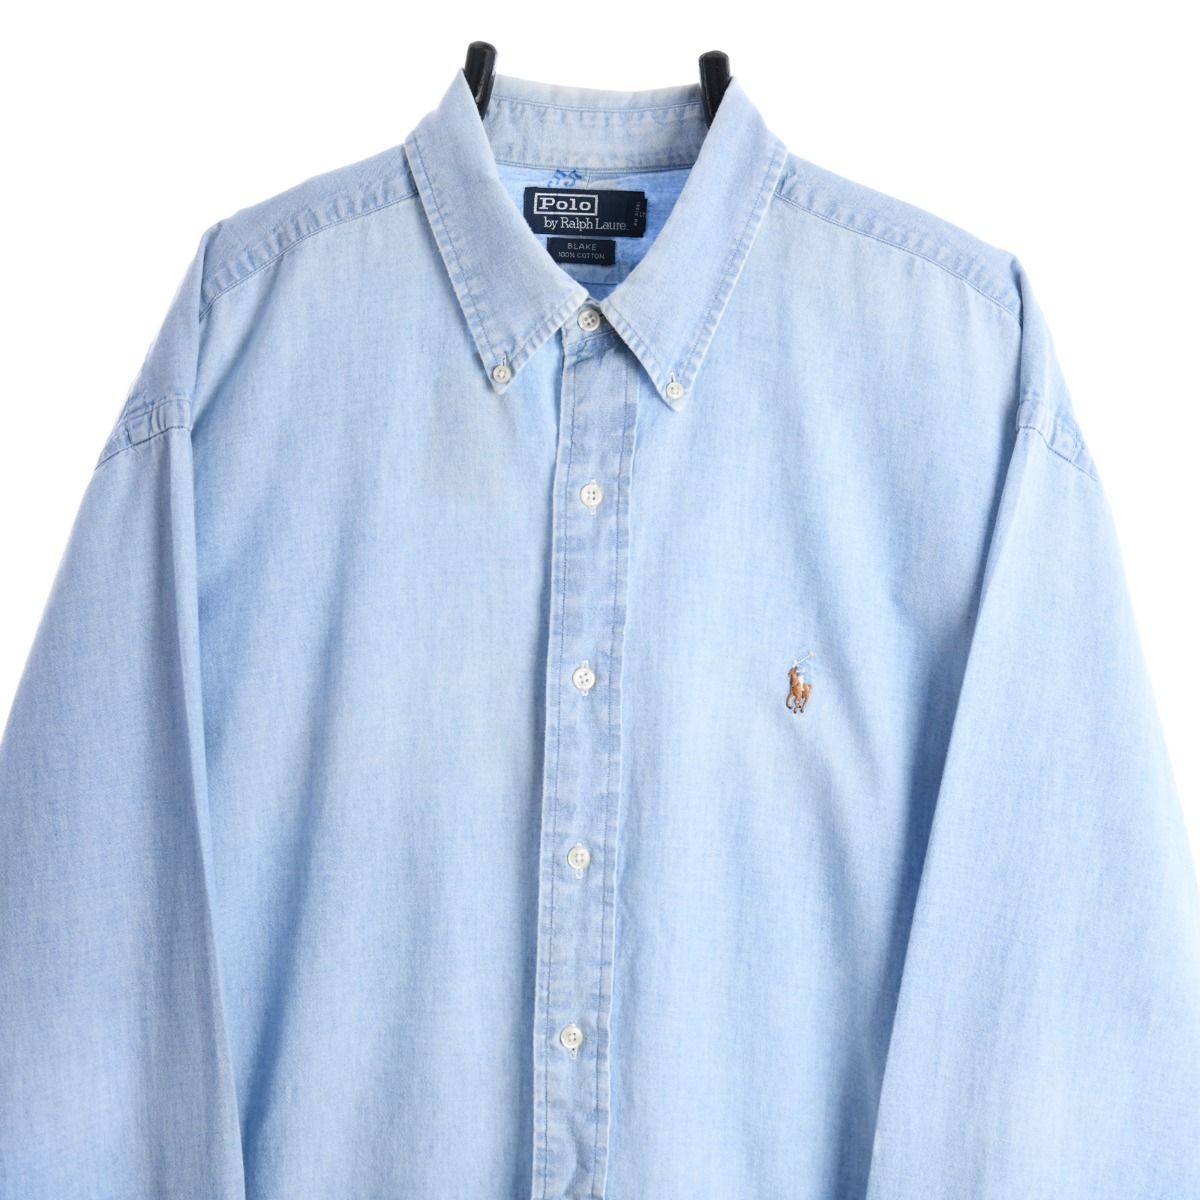 Ralph Lauren Blake Shirt in Washed Blue